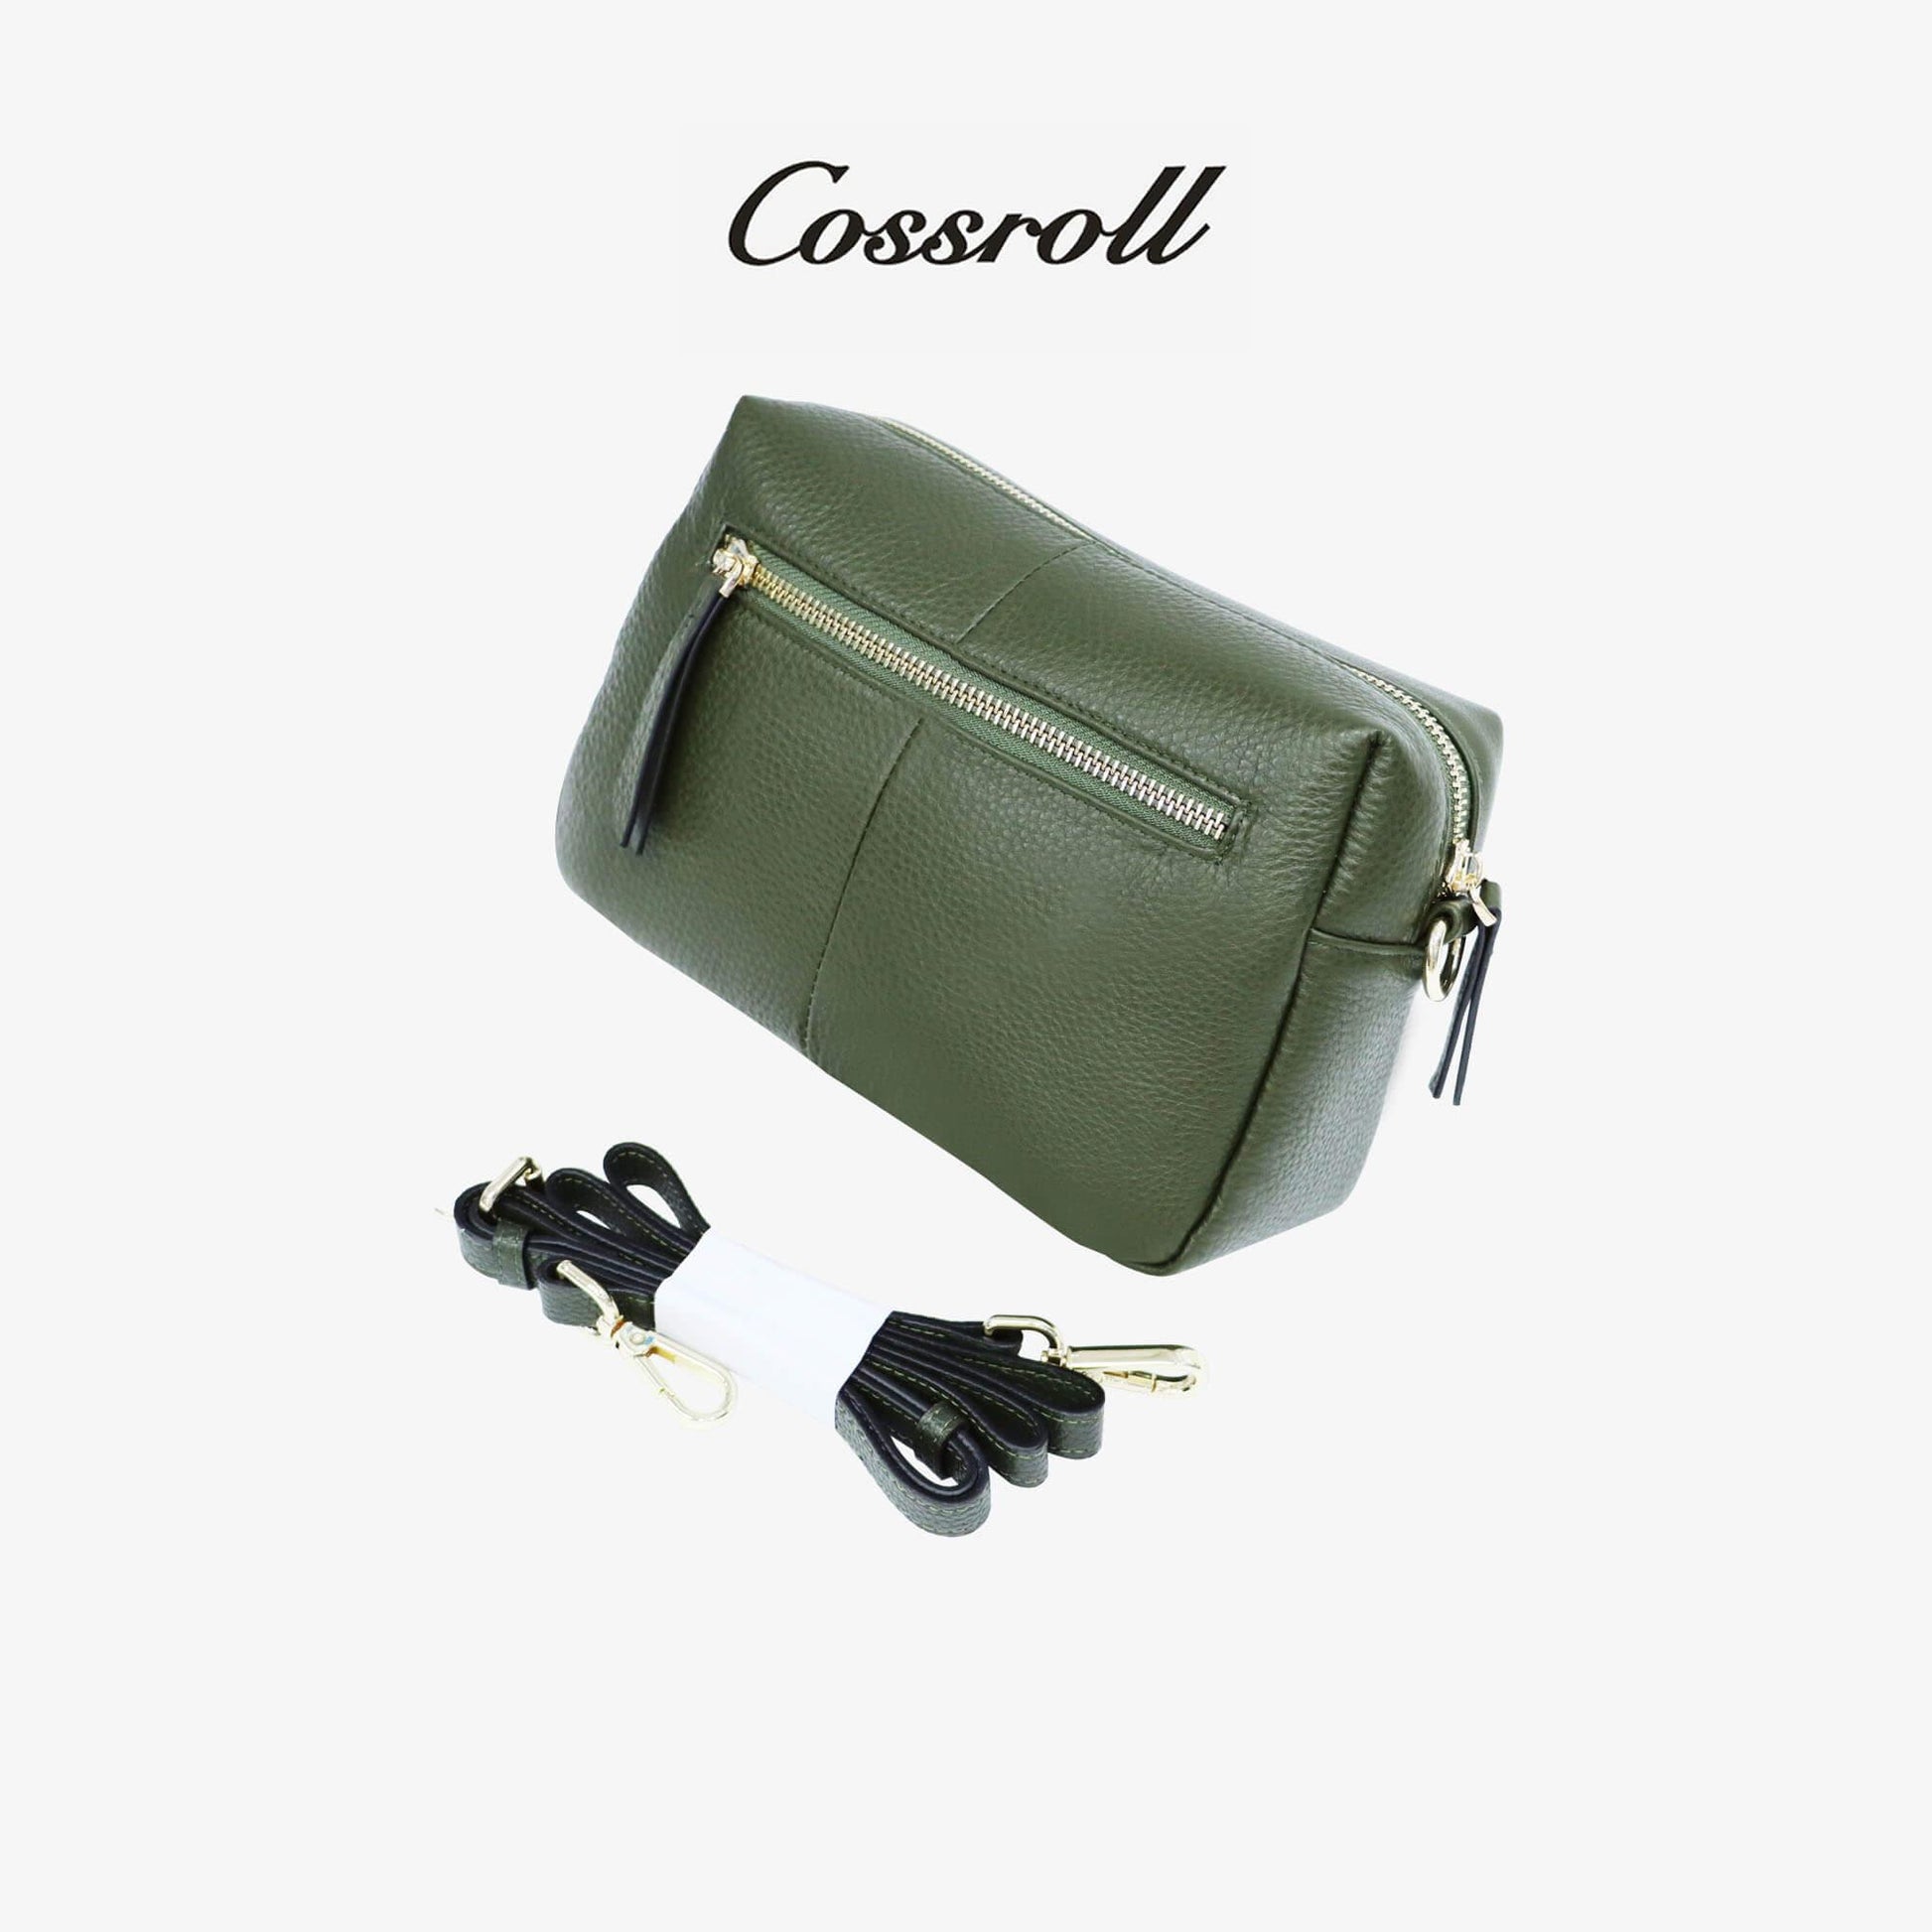 Handmade Crossbody Small Bag For Women - cossroll.leather